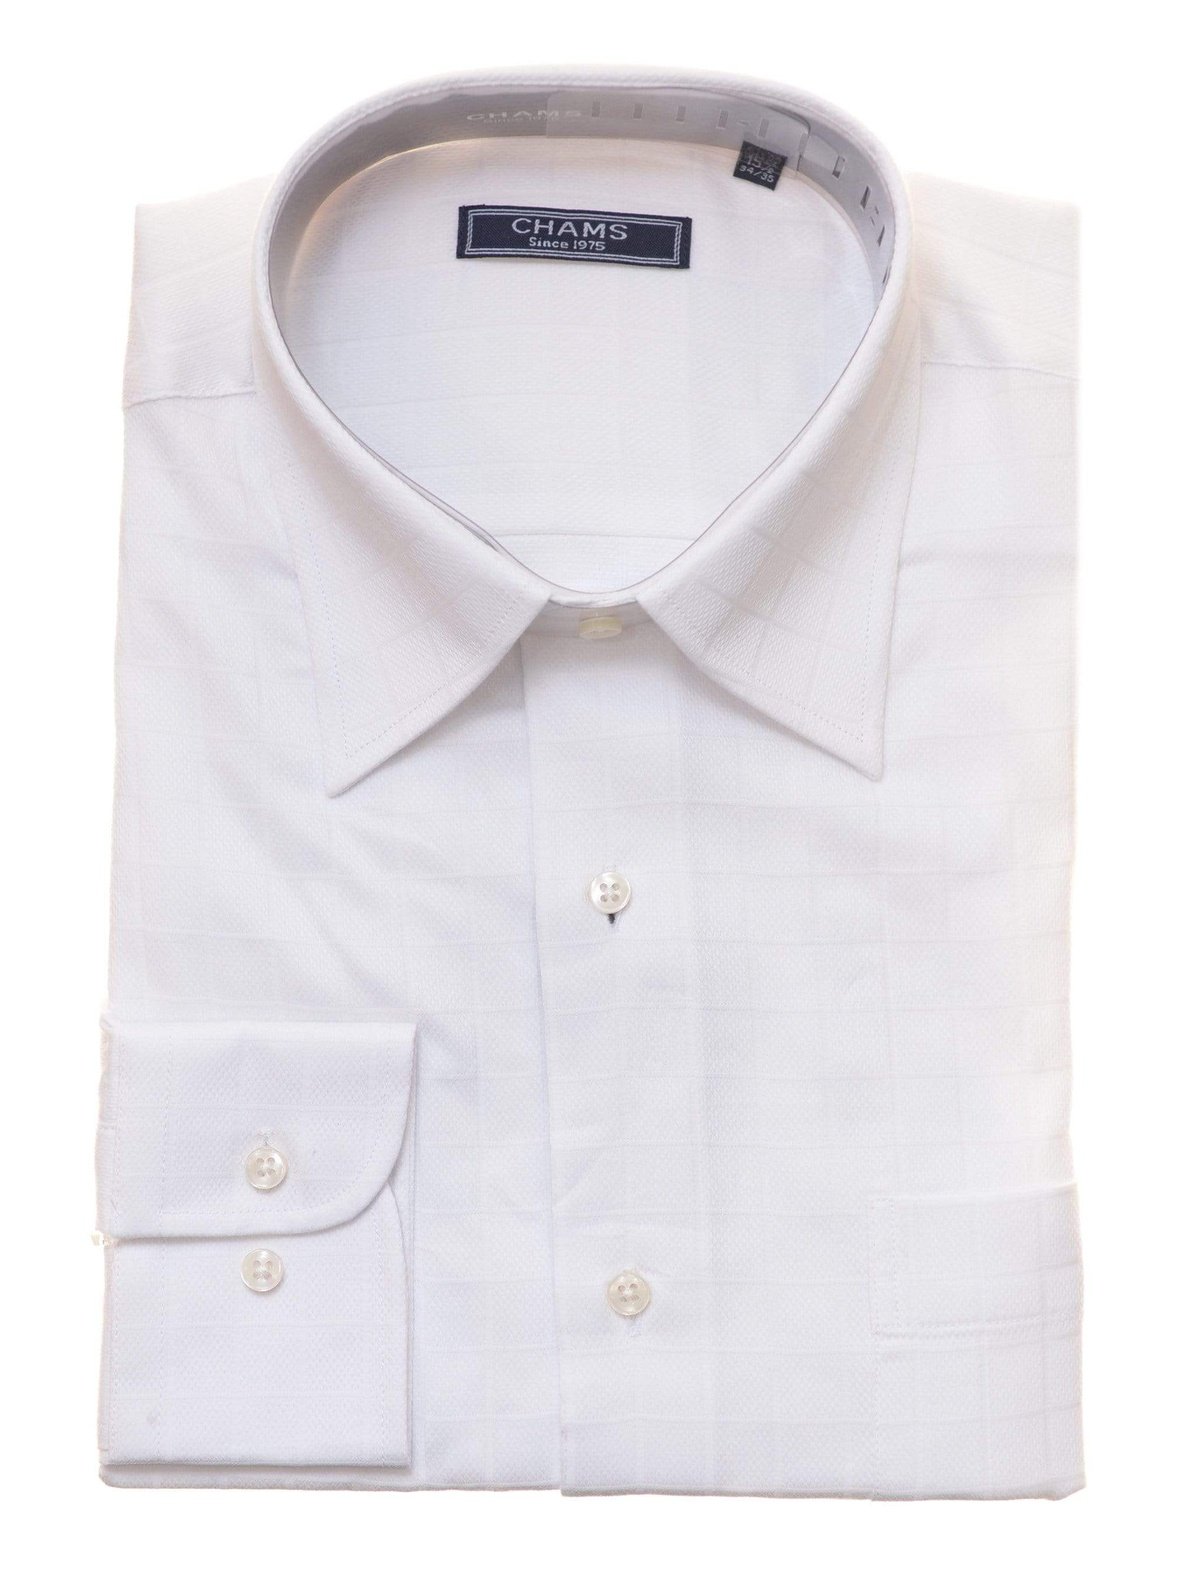 Chams SHIRTS 14 1/2 34/35 Chams Classic Fit White Tonal Plaid Fine Combed Cotton Dress Shirt